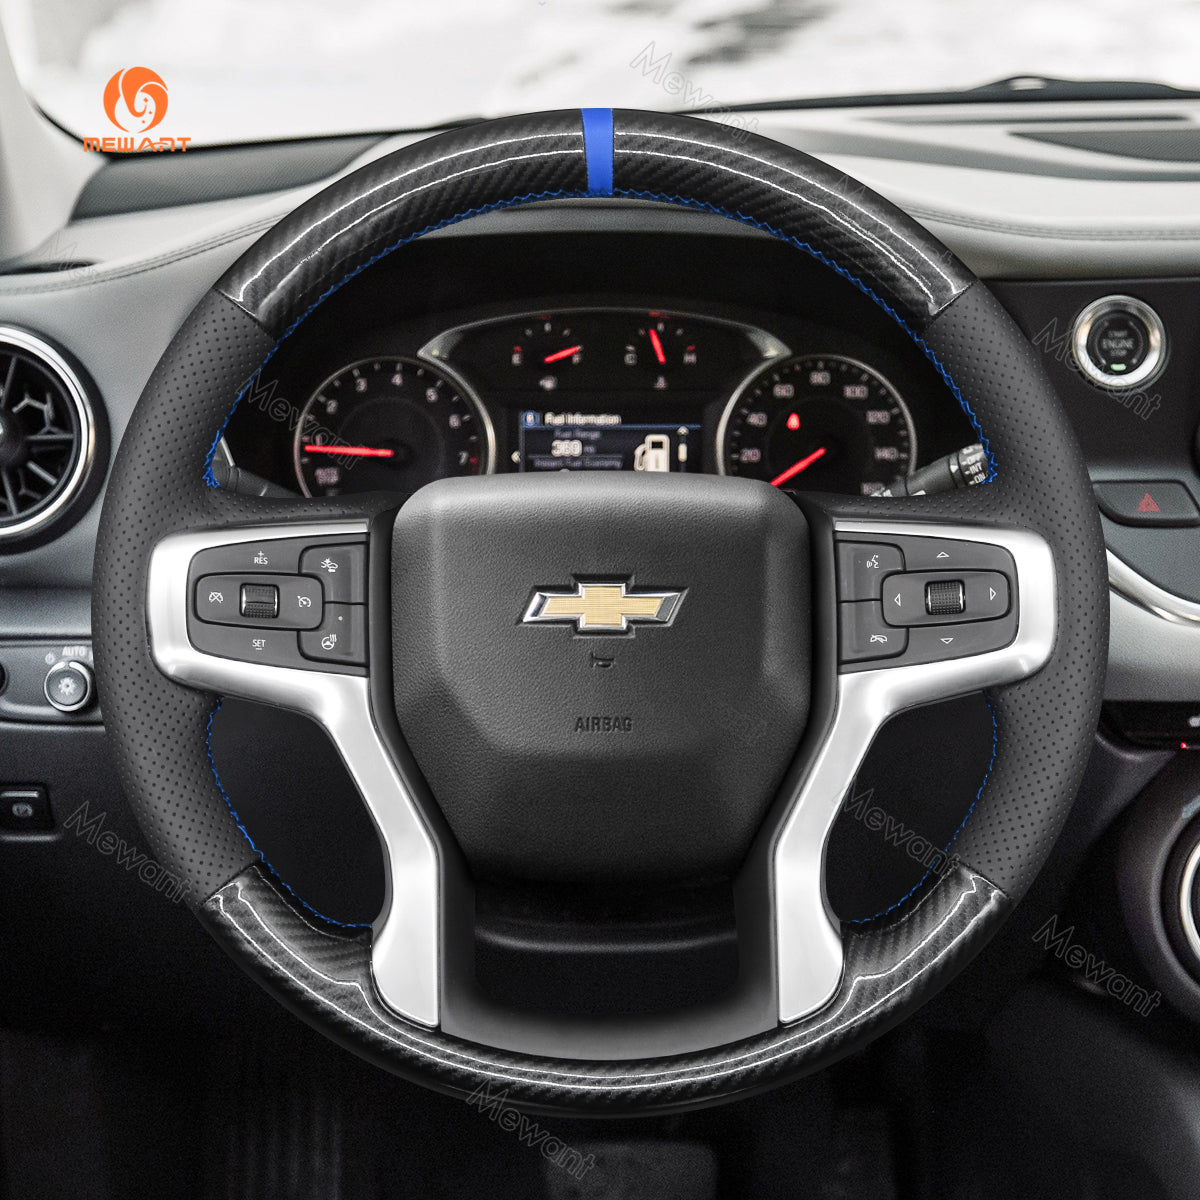 MEWANT Hand Stitch Car Steering Wheel Cover for Chevrolet Blazer Silverado Suburban Tahoe